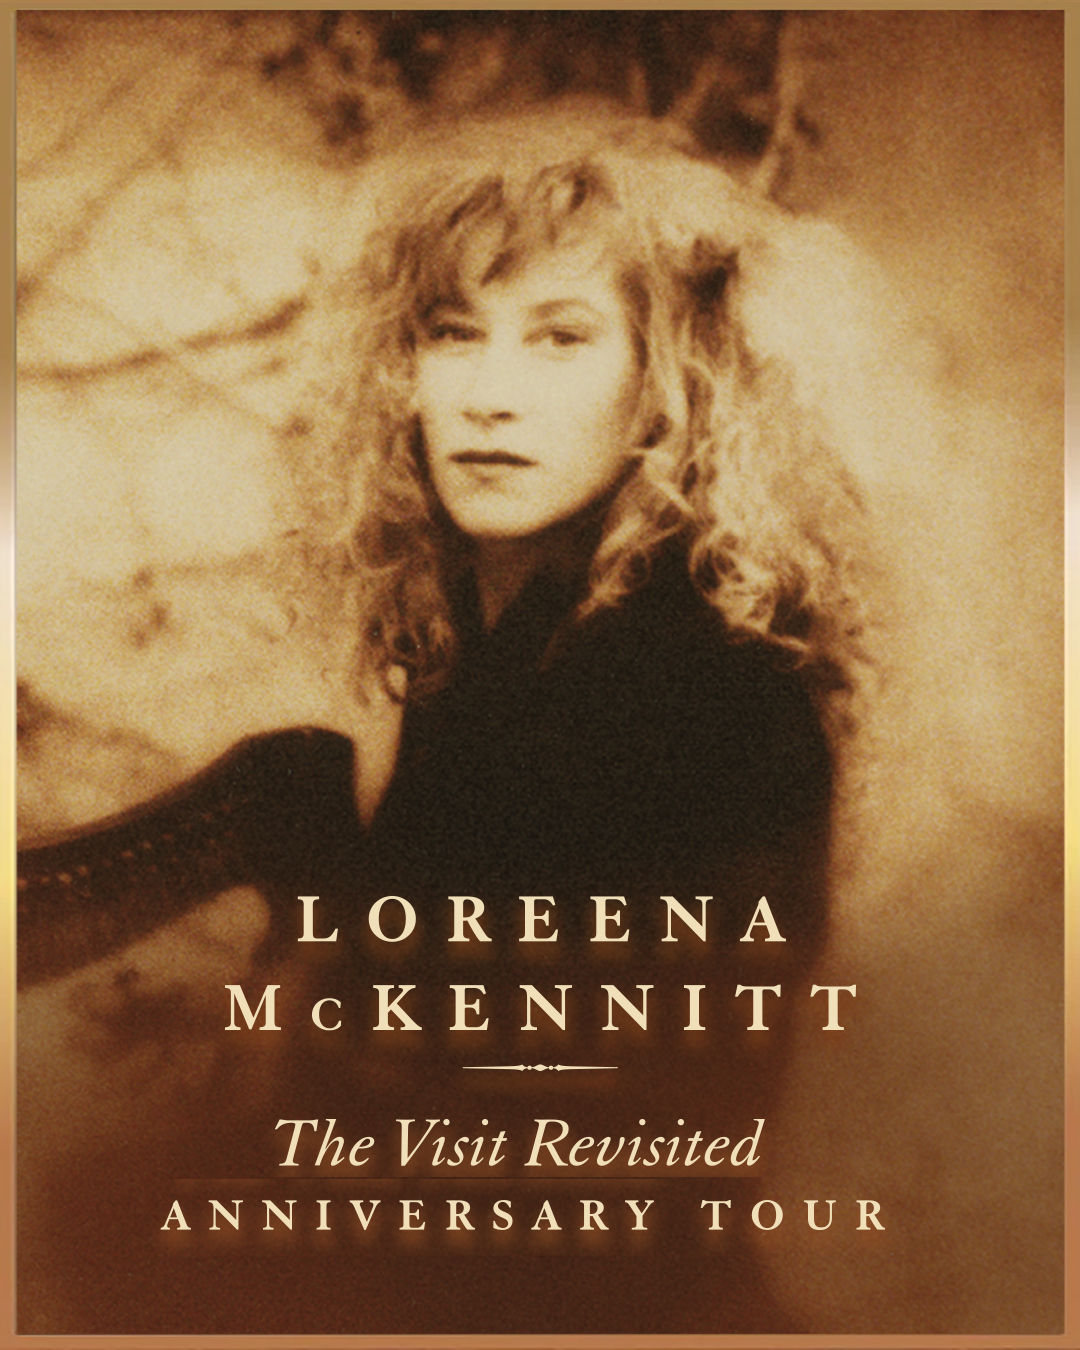 Loreena McKennitt The Visit Revisited Tour